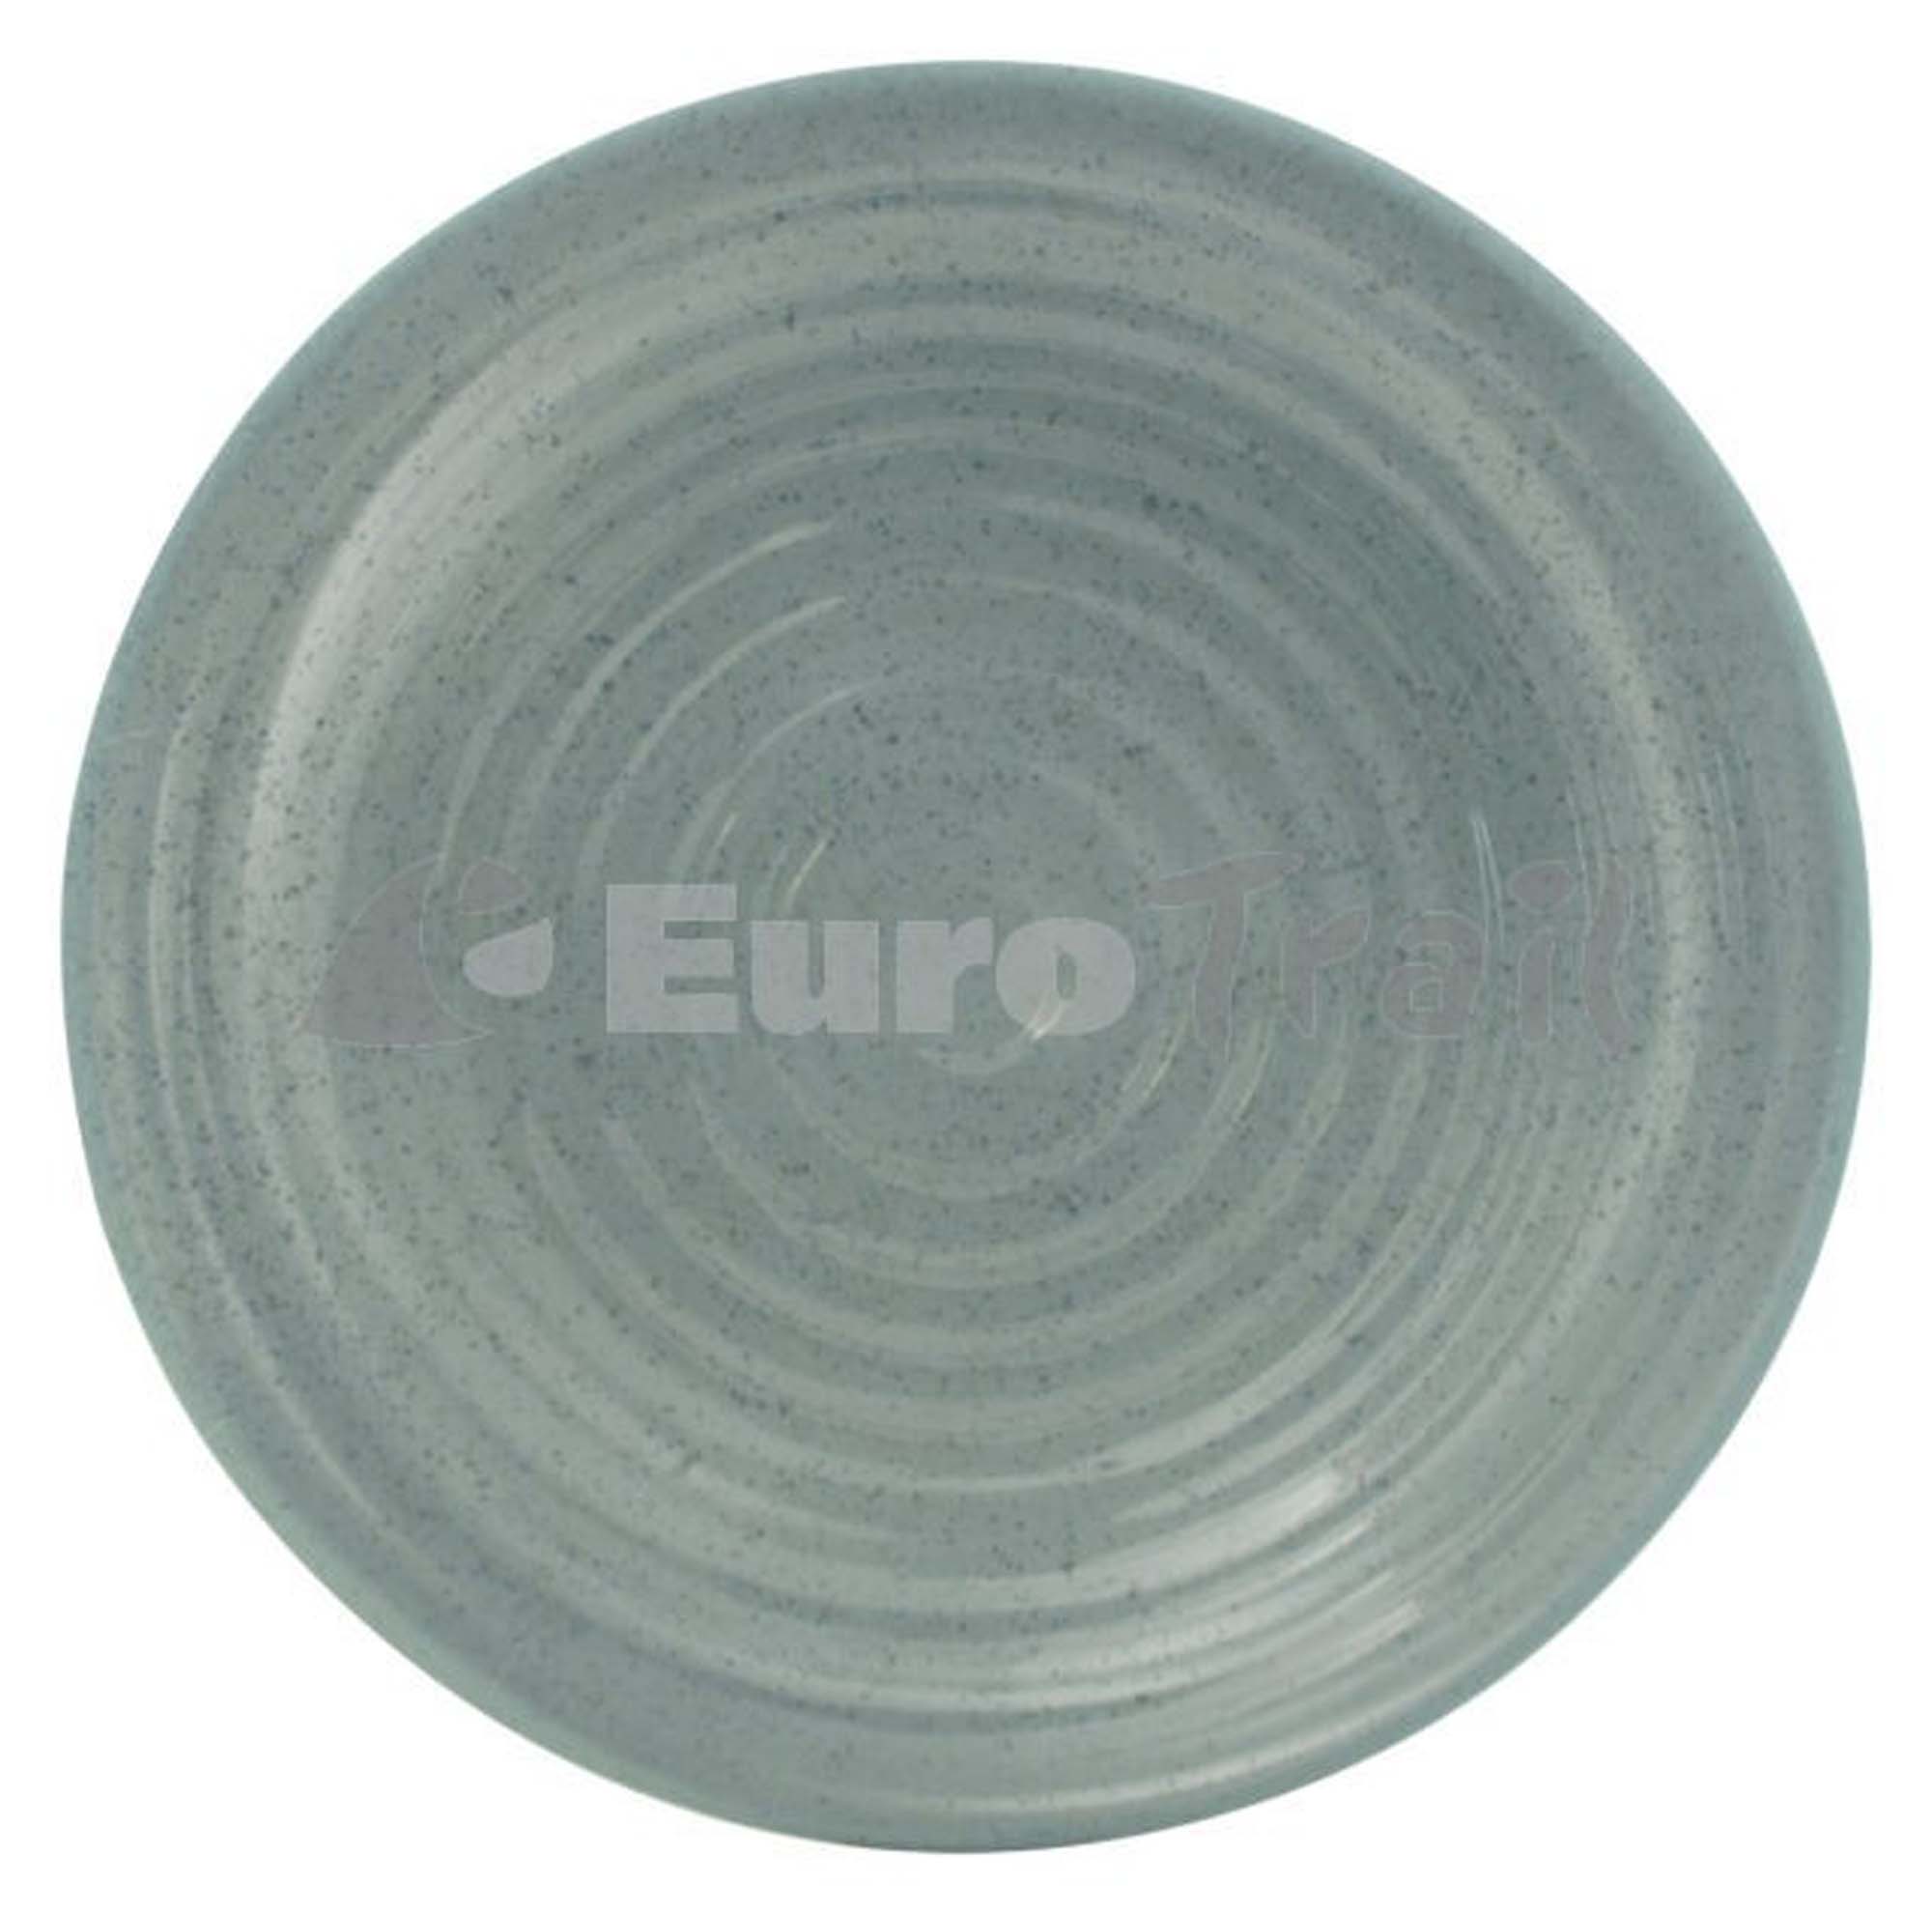 EUROTRAIL Denia Plat Bord 21,5 cm